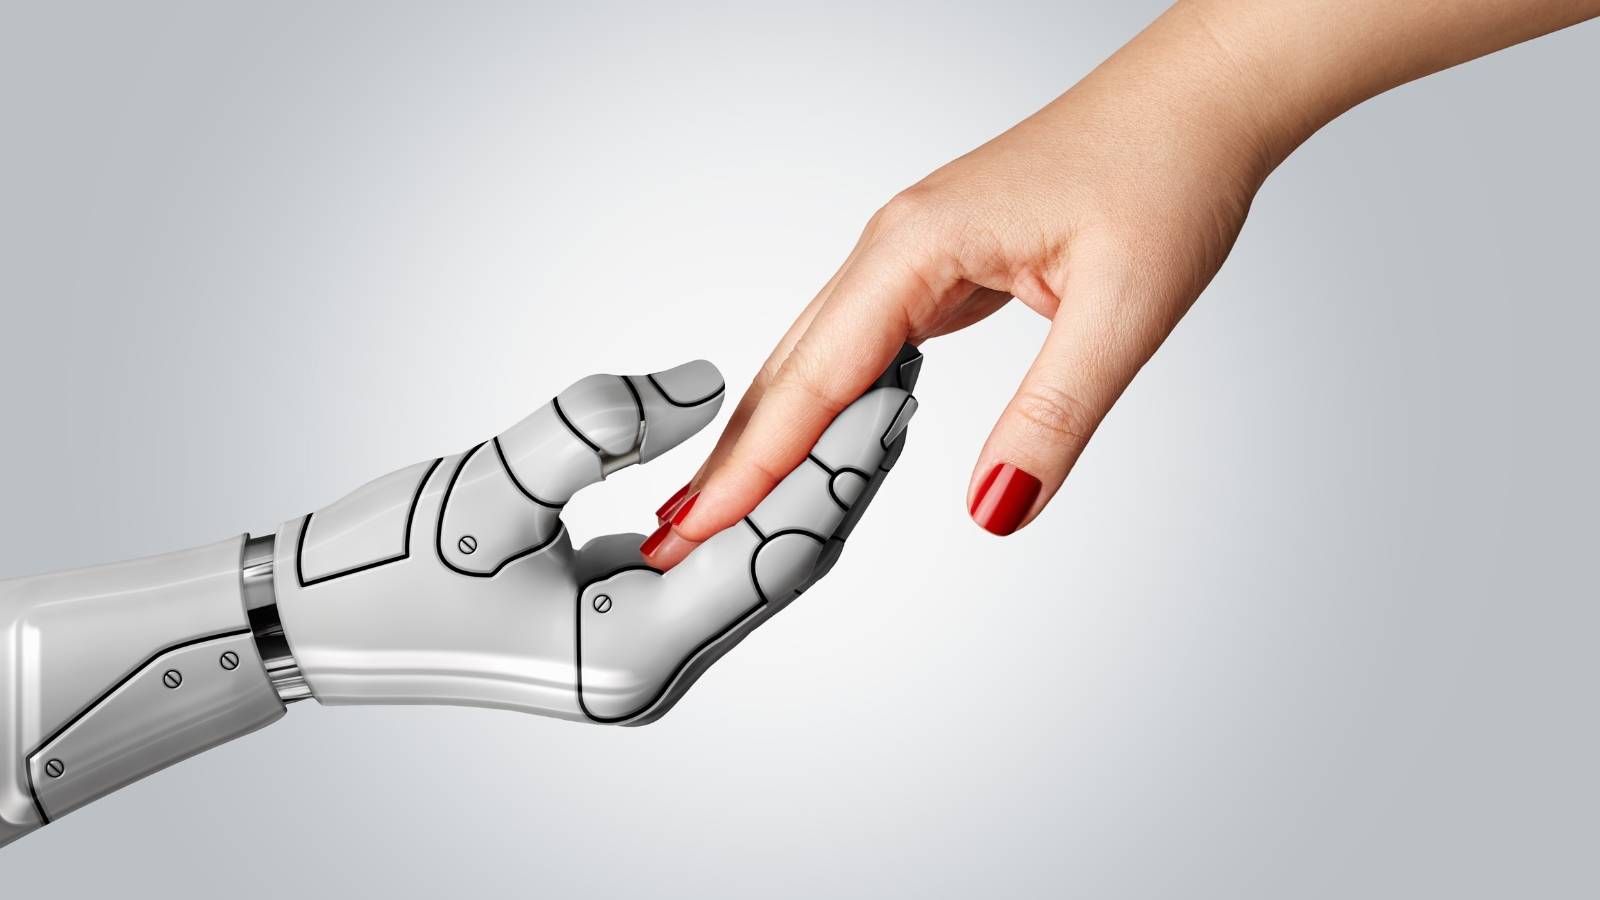 Robot touching a human hand